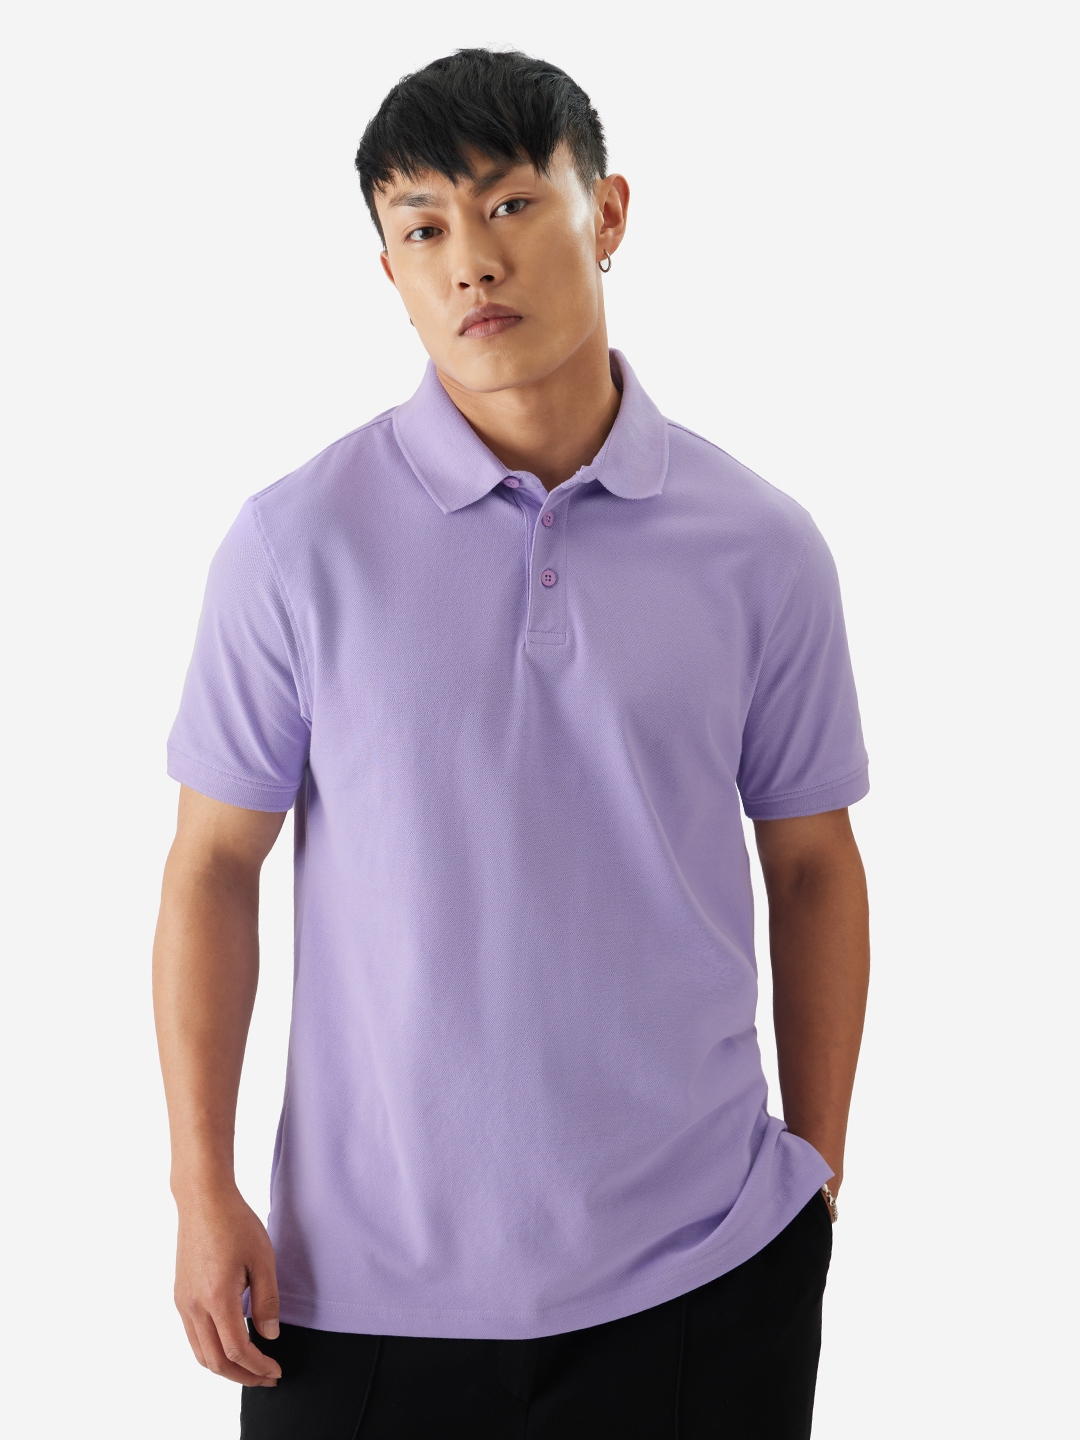 The Souled Store | Men's Solids: Deep Lavender Polo T-Shirt